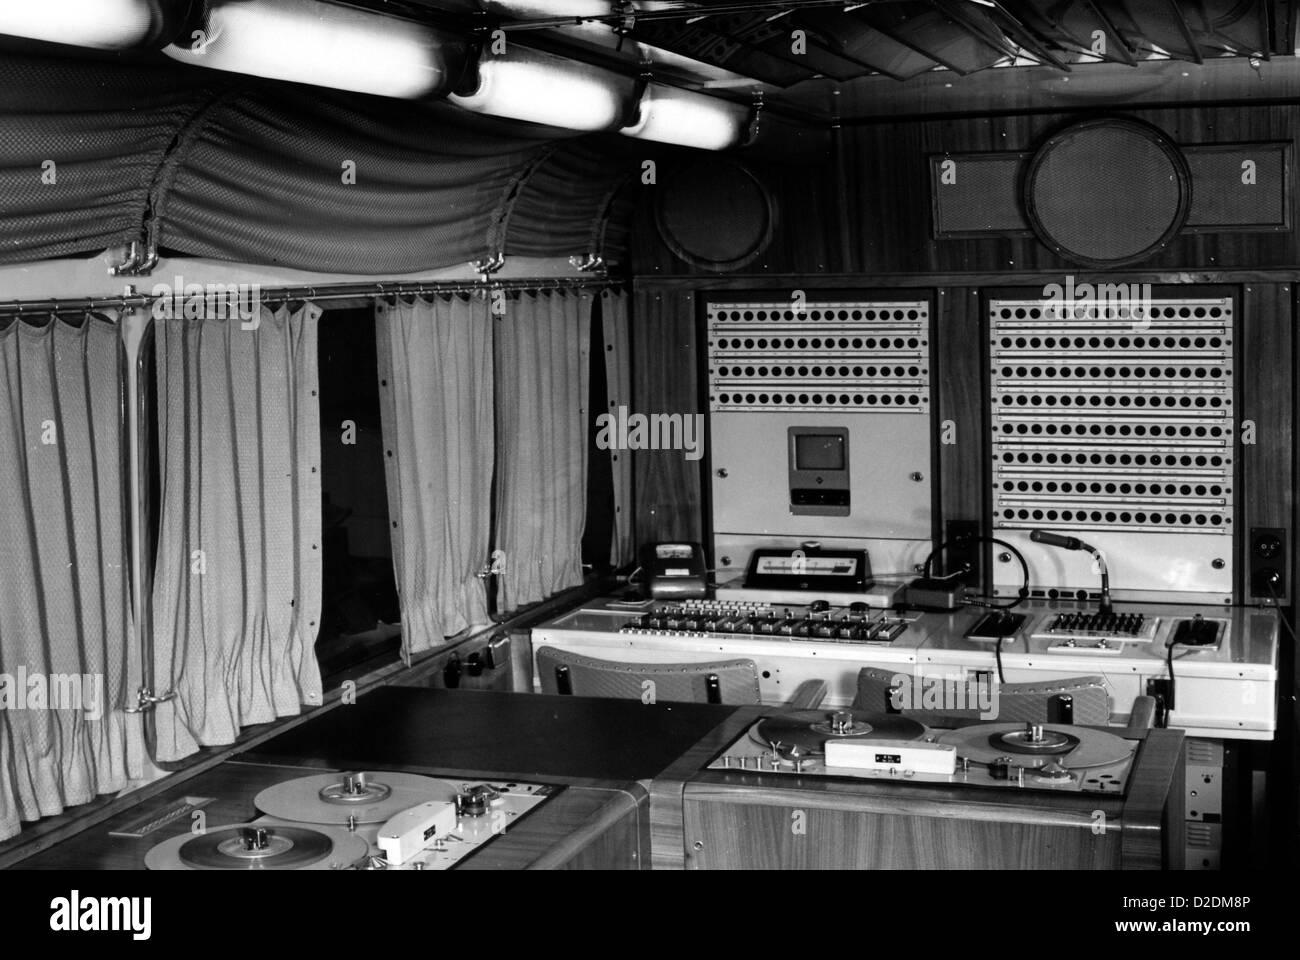 Broadcasting Center der DDR in Ost-Berlin - Technikraum. Stockfoto